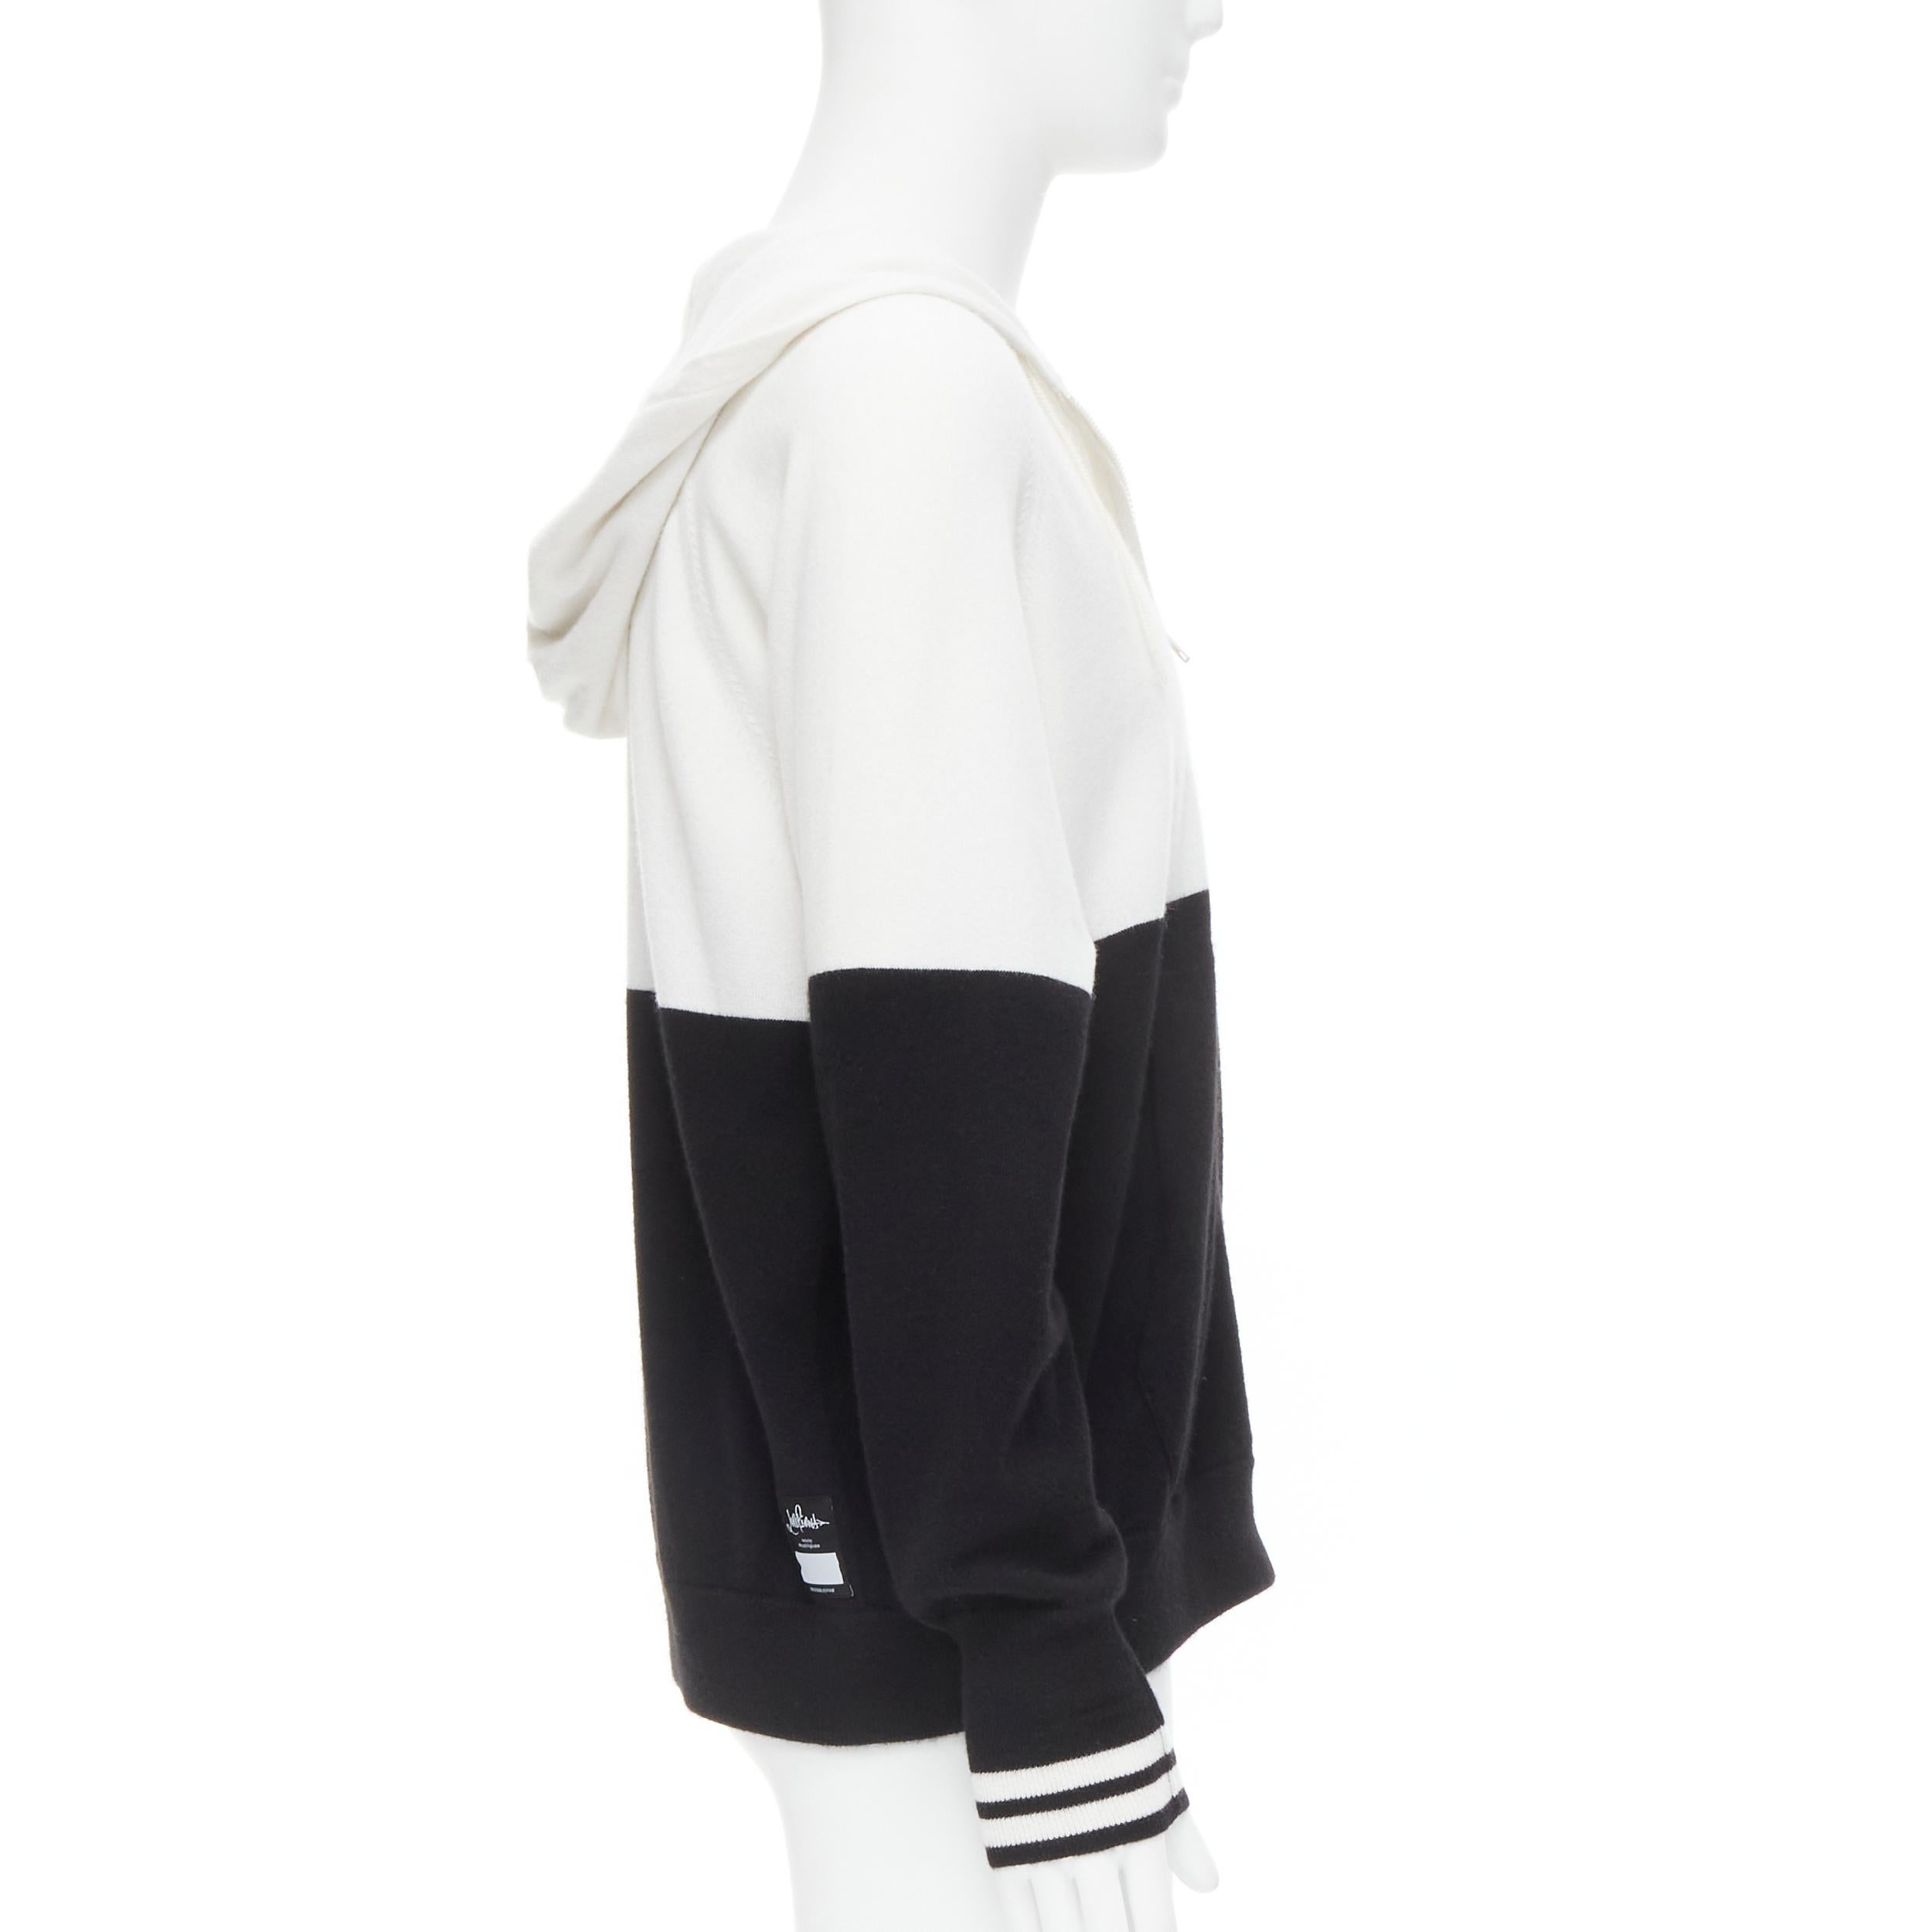 Black new LORO PIANA HIROSHI FUJIWARA 100% cashmere  hooded black white hoodie L